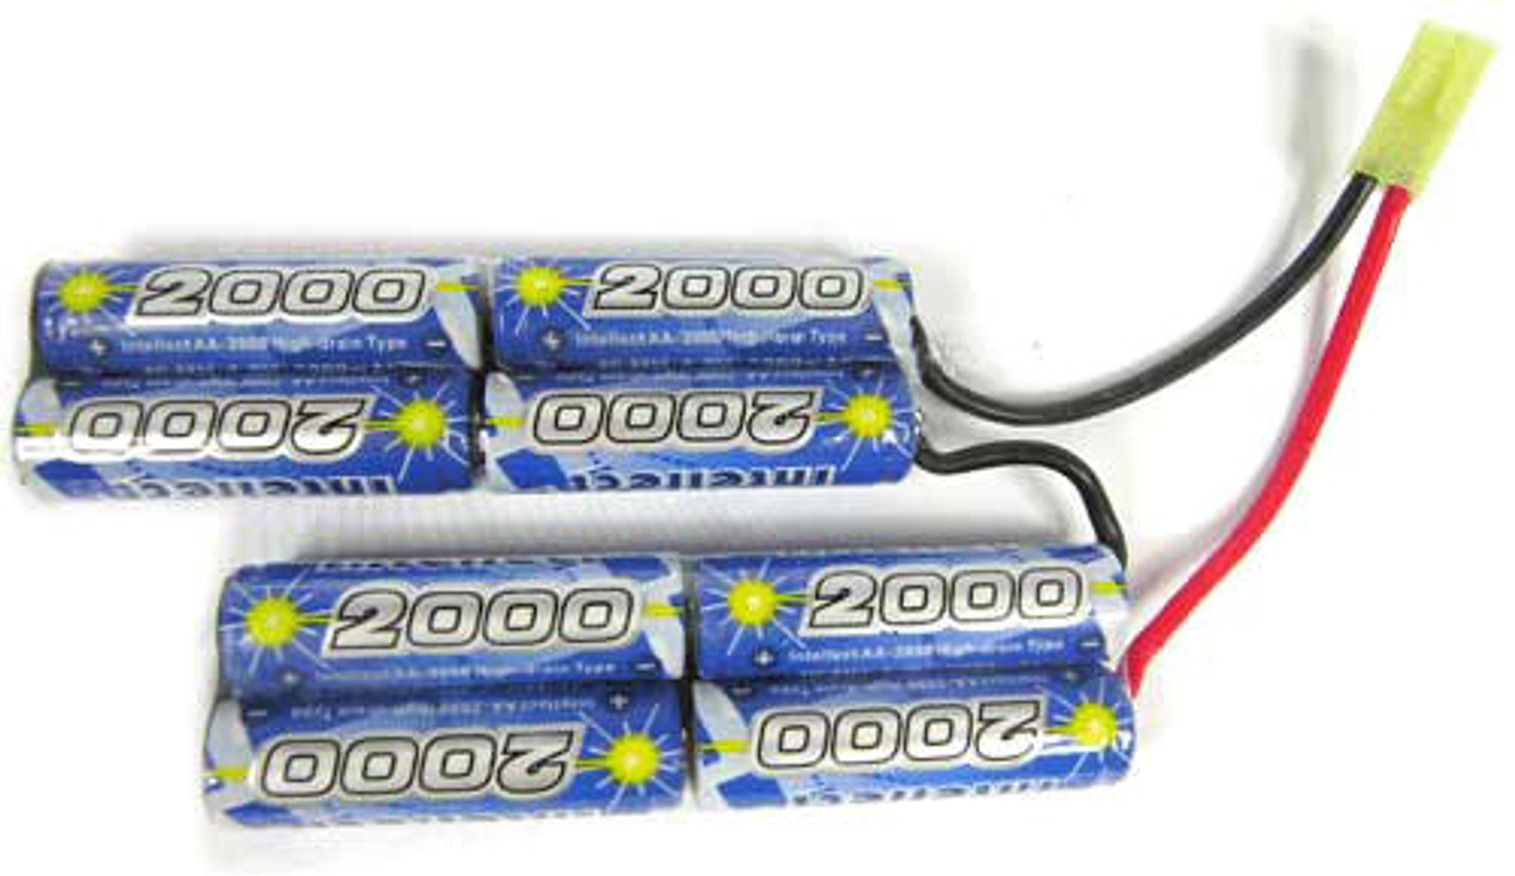 Intellect High Output 9.6V 2000mAh Ni-MH Custom Type Battery (For PEQ box, M4, AK47 and AUG)